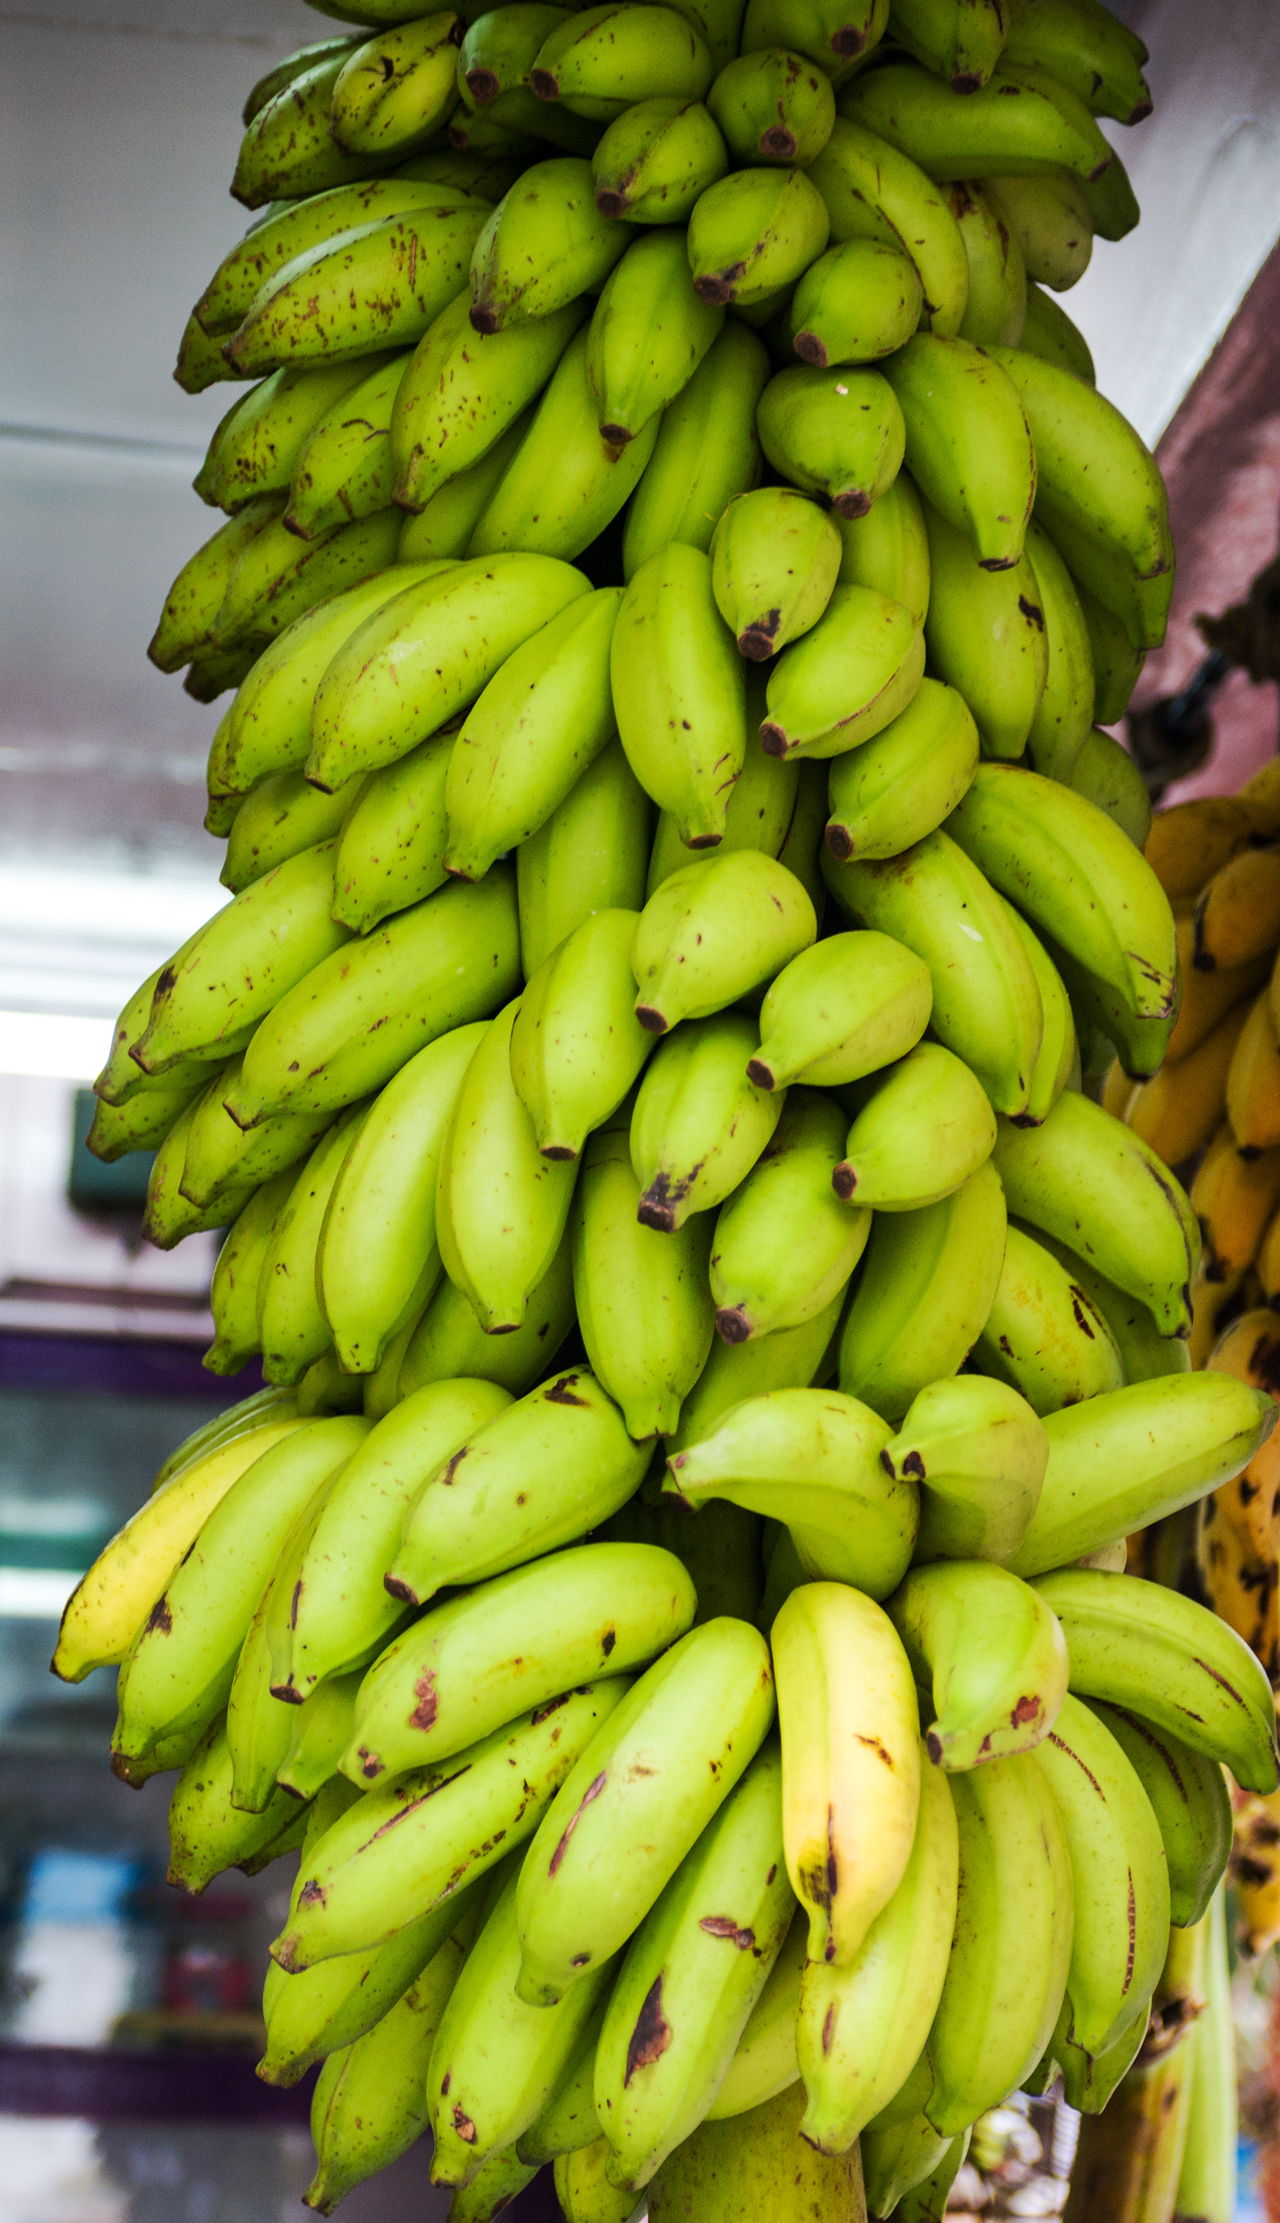 Do Bananas Cause Gas?